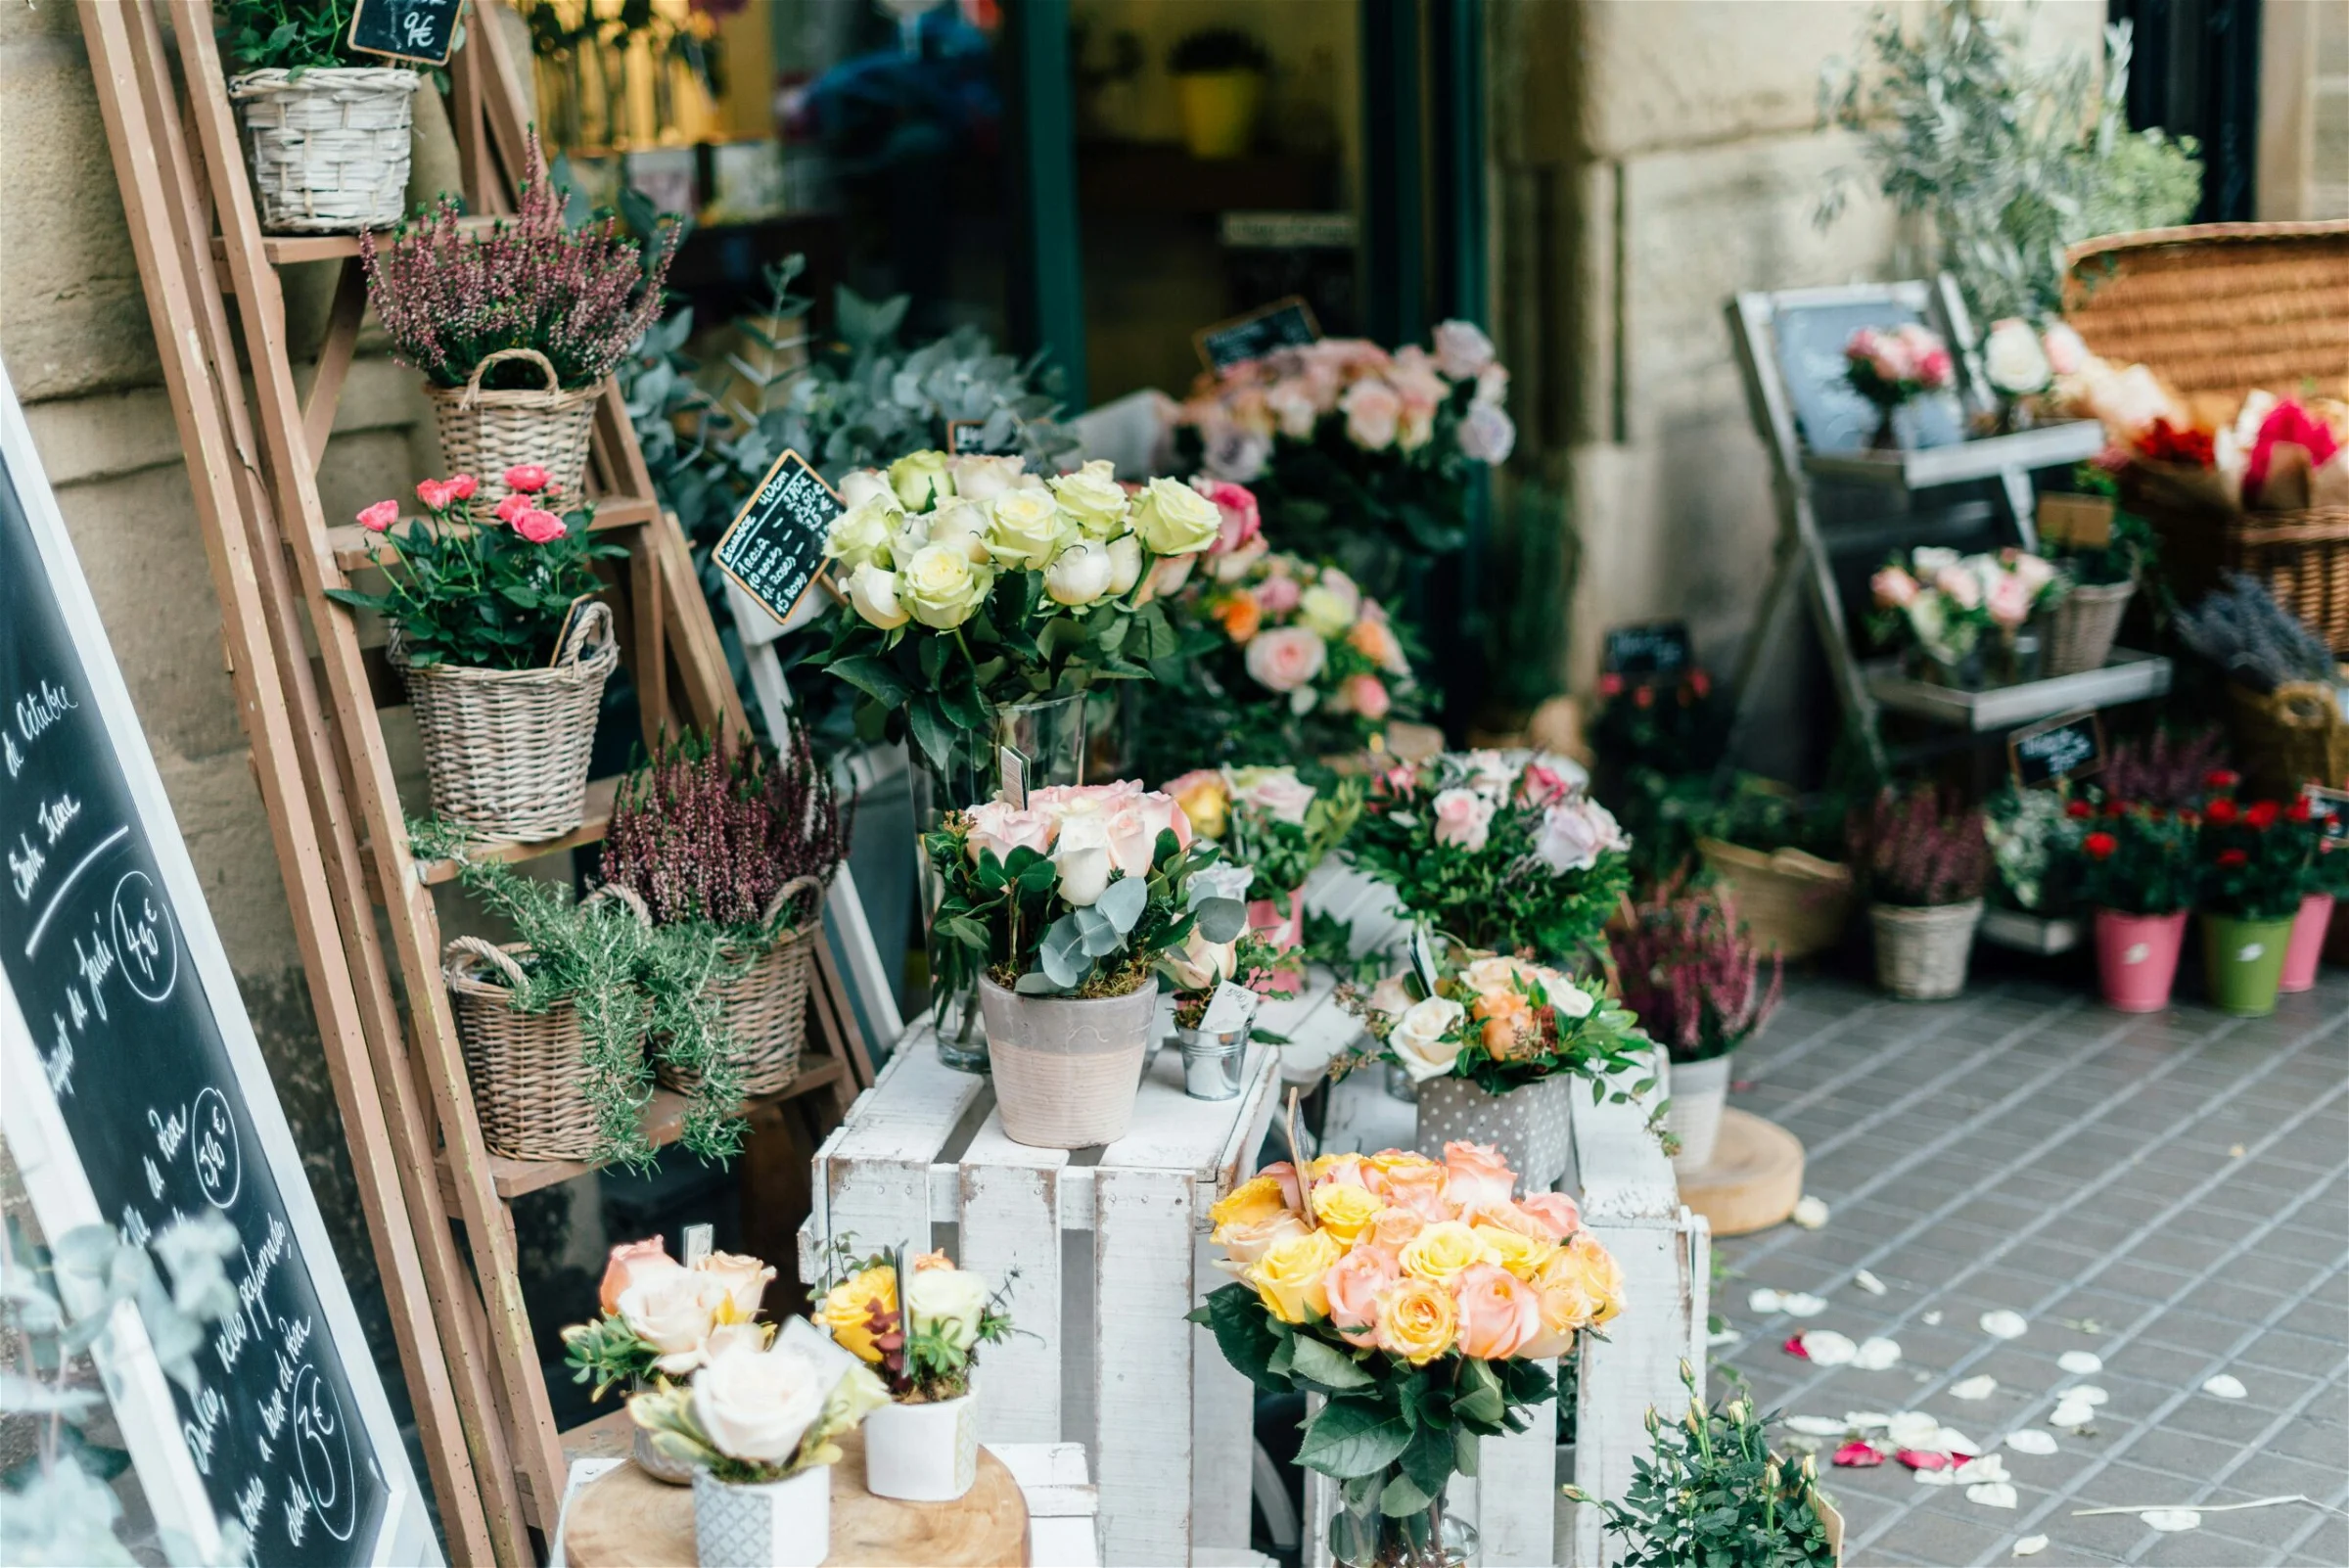 florist-stall-flower-display